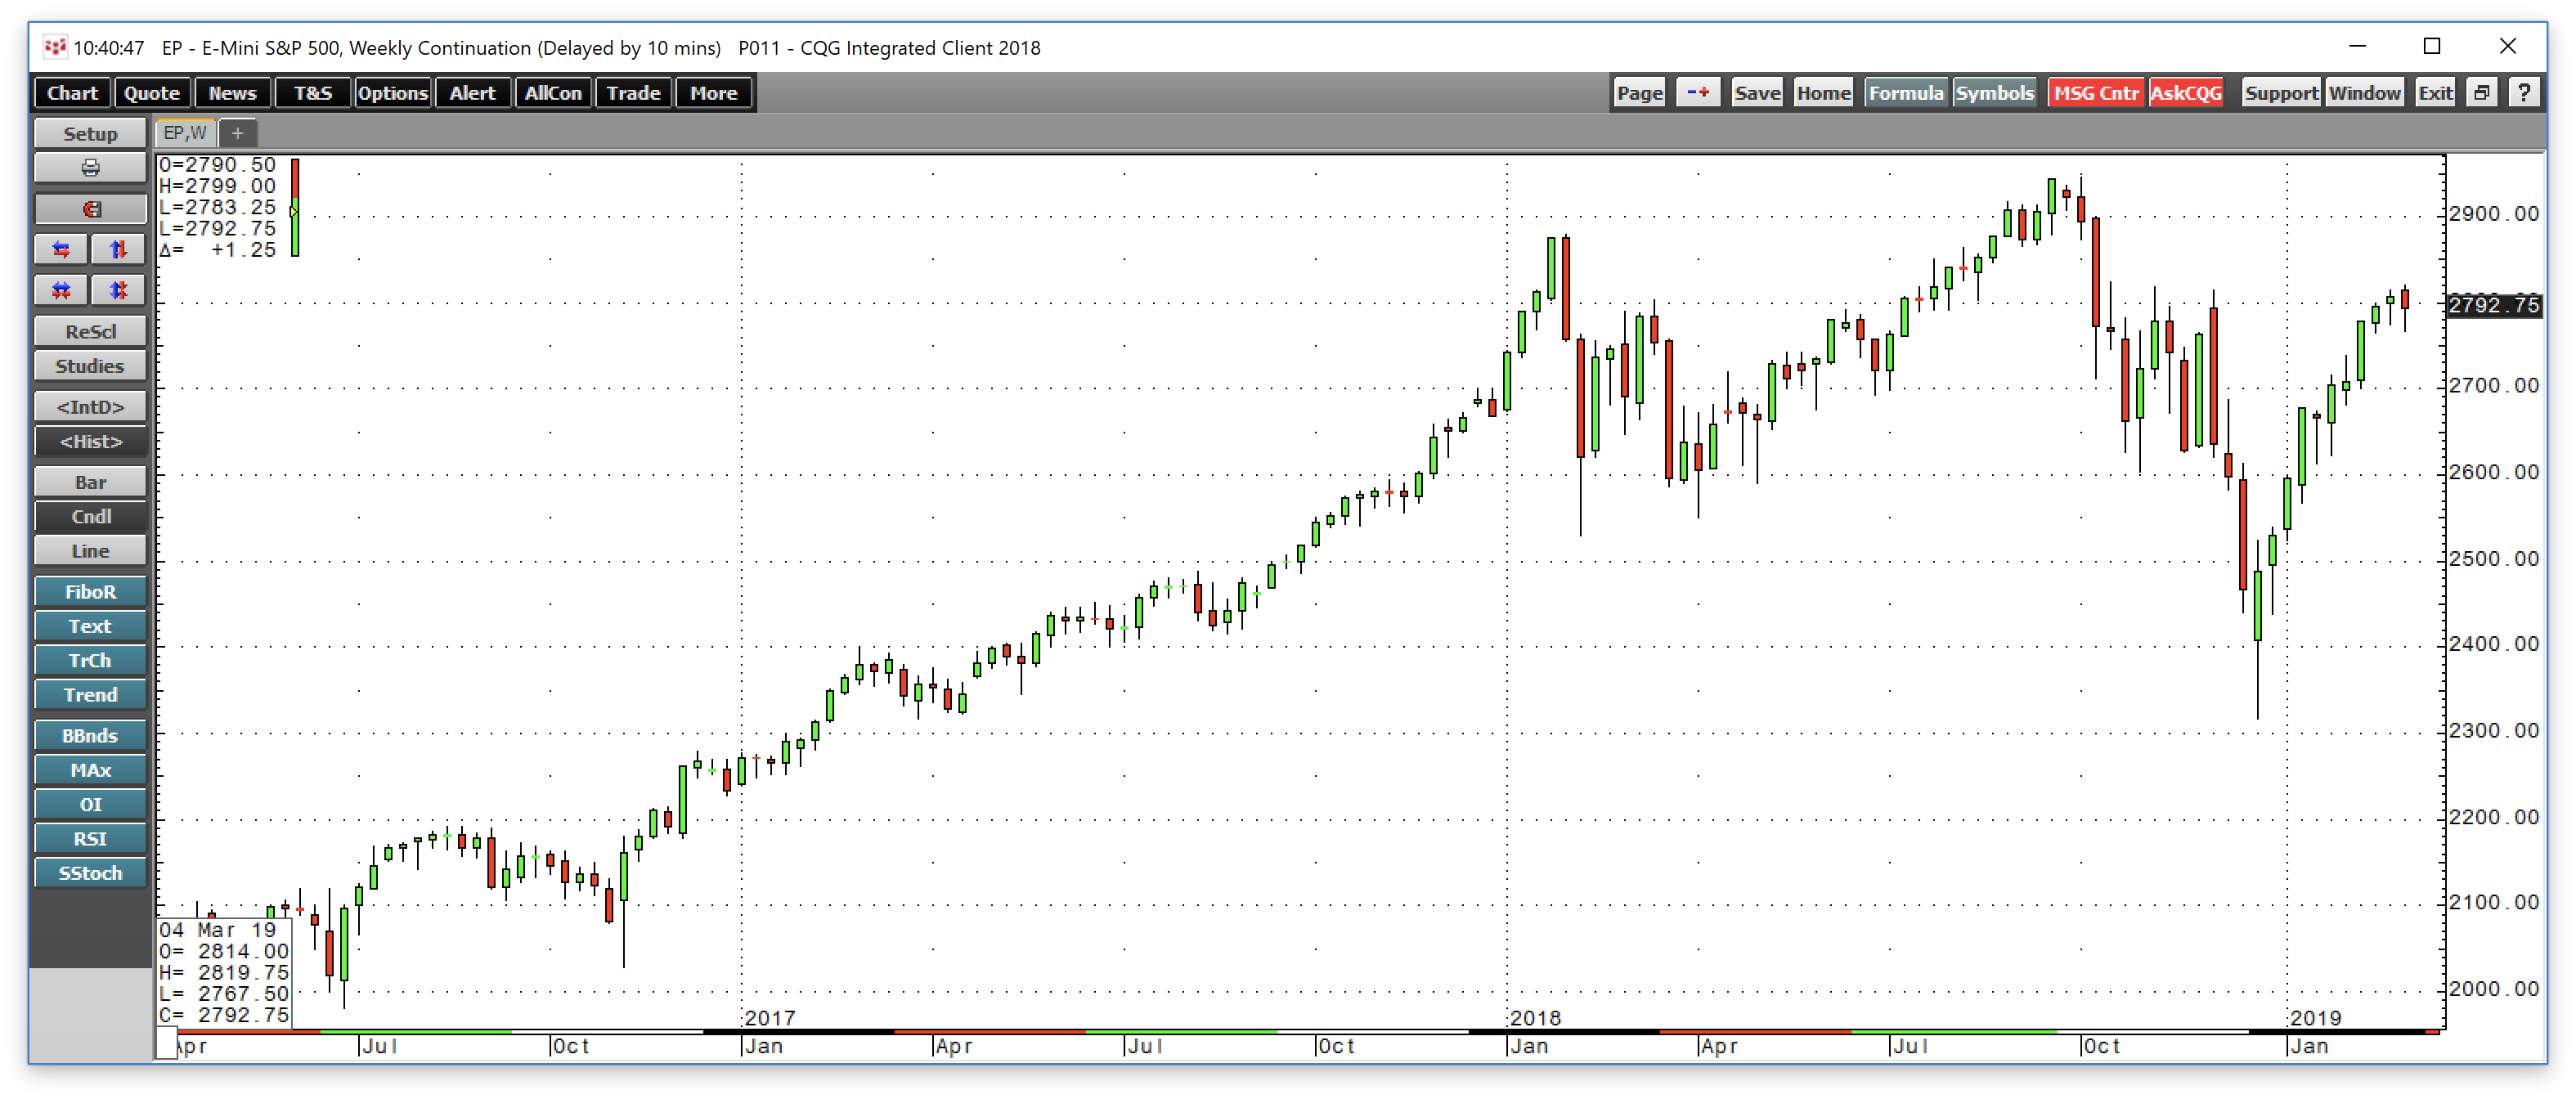 The Stock Market Looked Great March Madness Ahead? (BATSVIXY